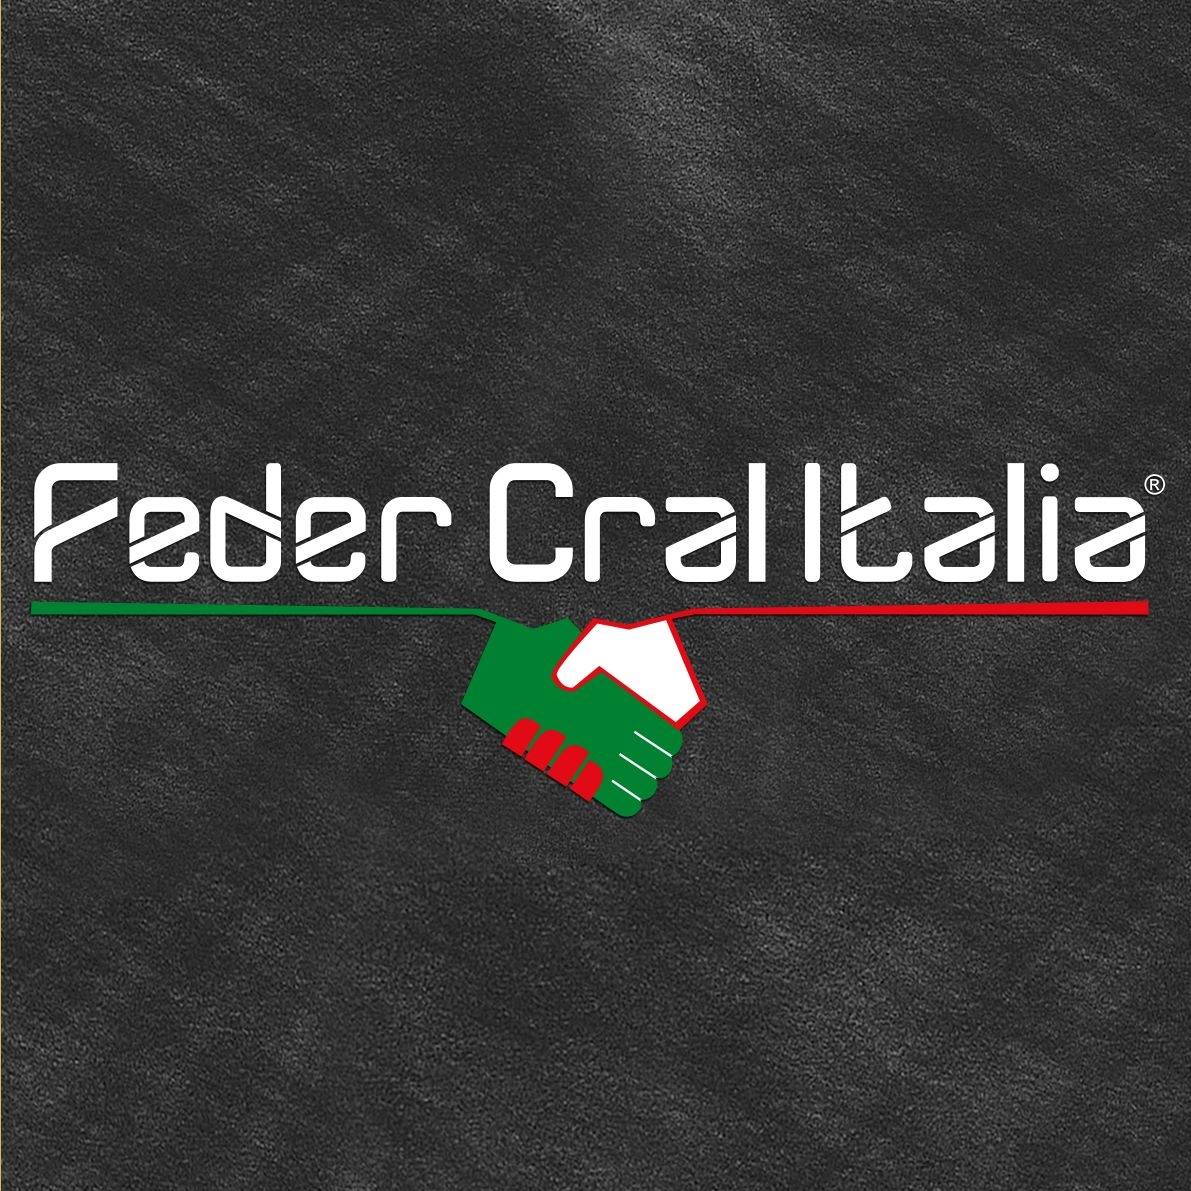 feder cral italia logo